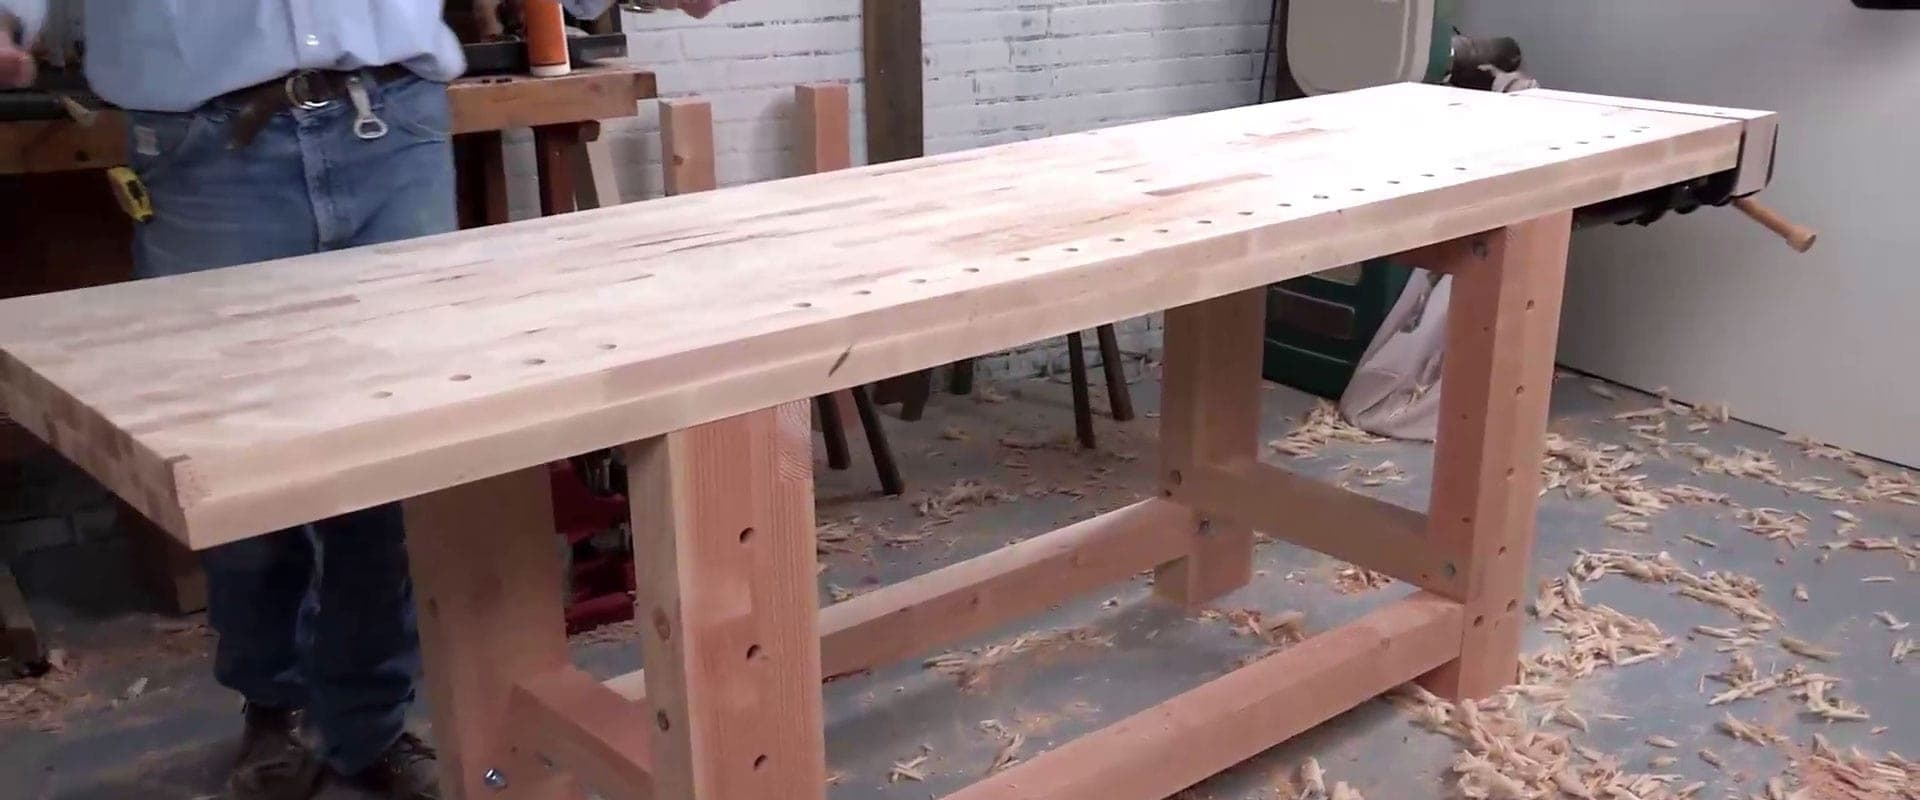 Build a Sturdy Workbench in Two Days with Christopher Schwarz